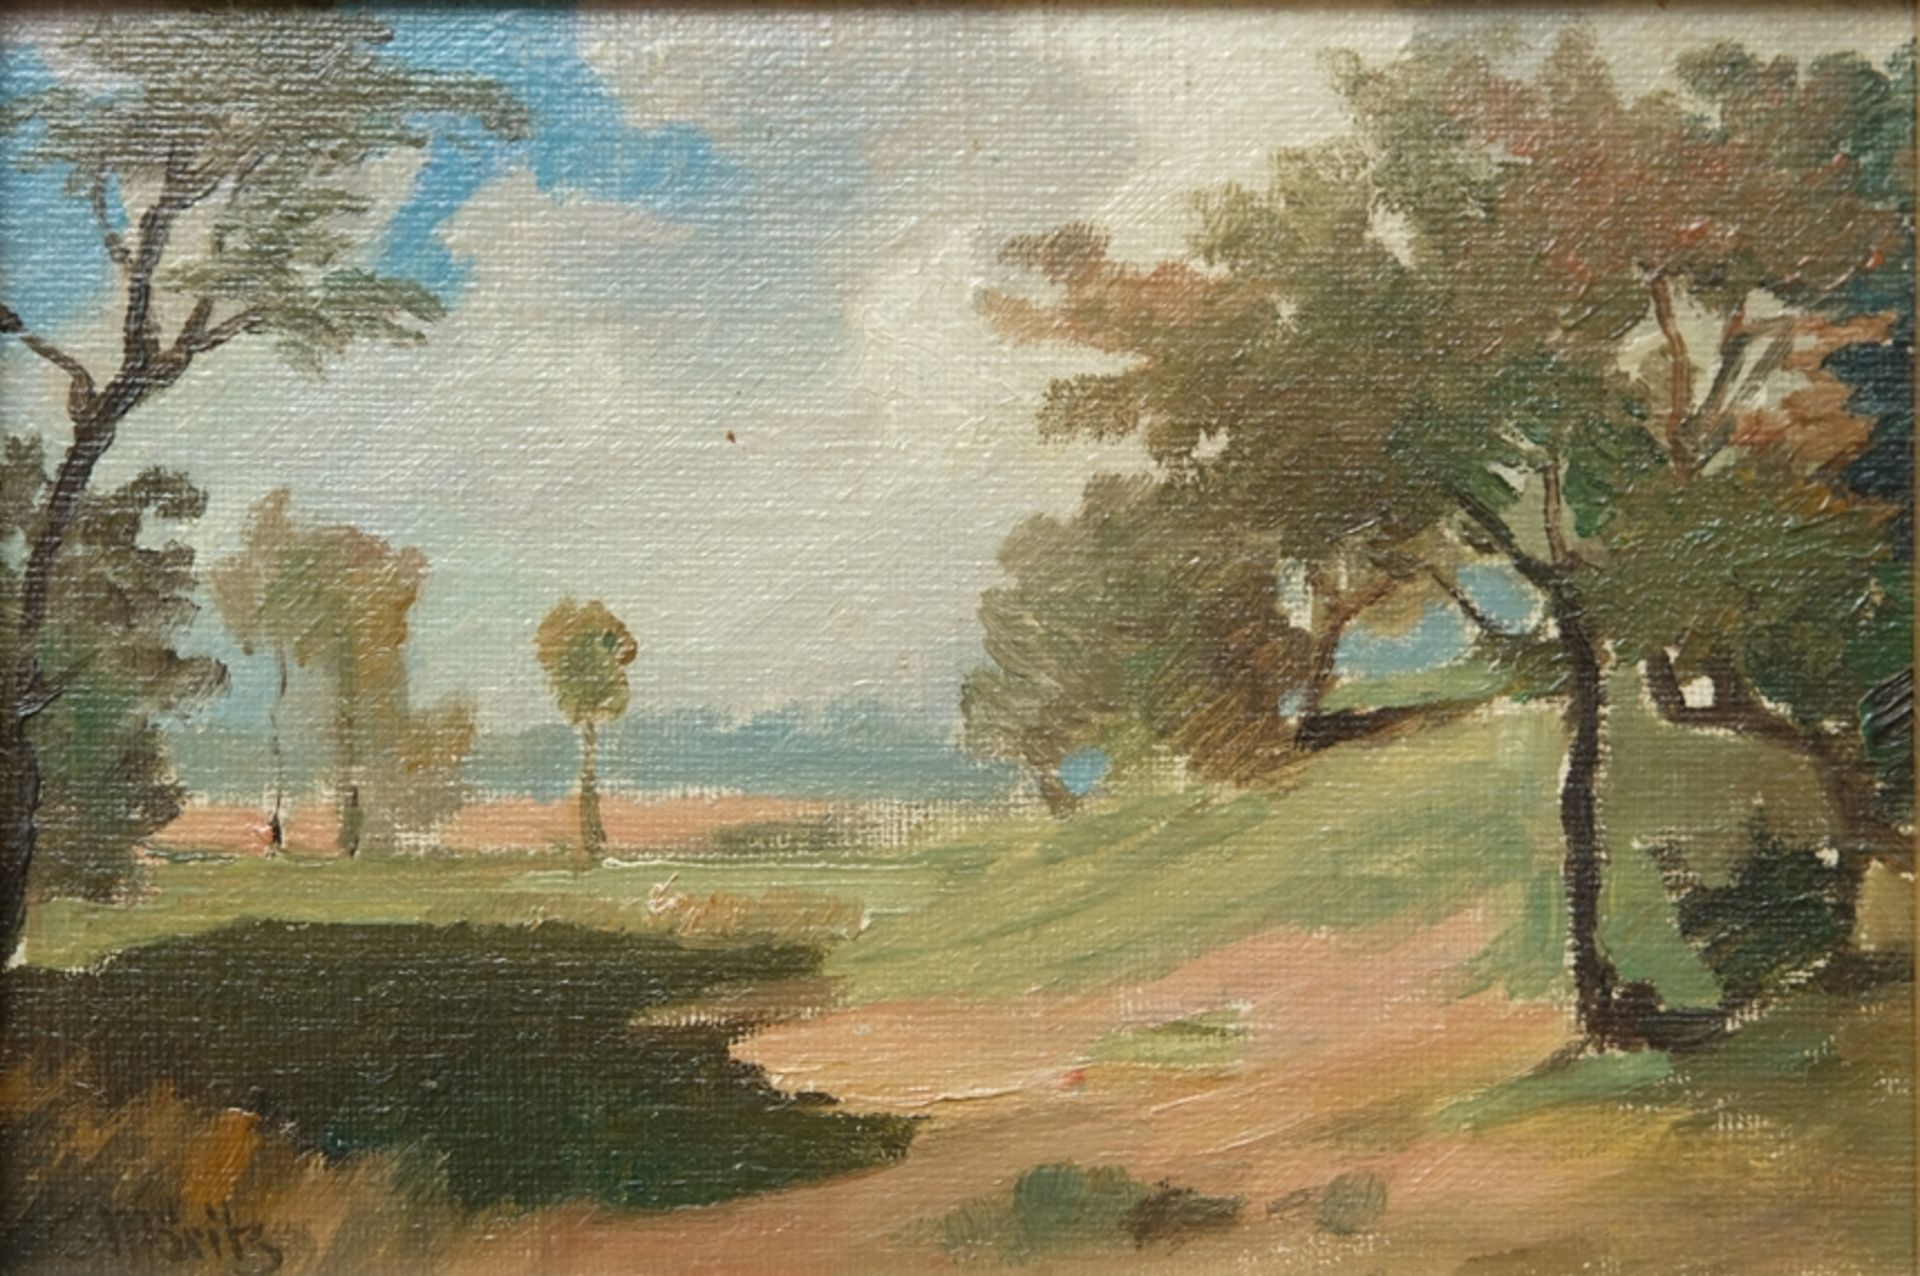 Möritz, Carl (20th century) Landscape, oil on cardboard-covered canvas. 